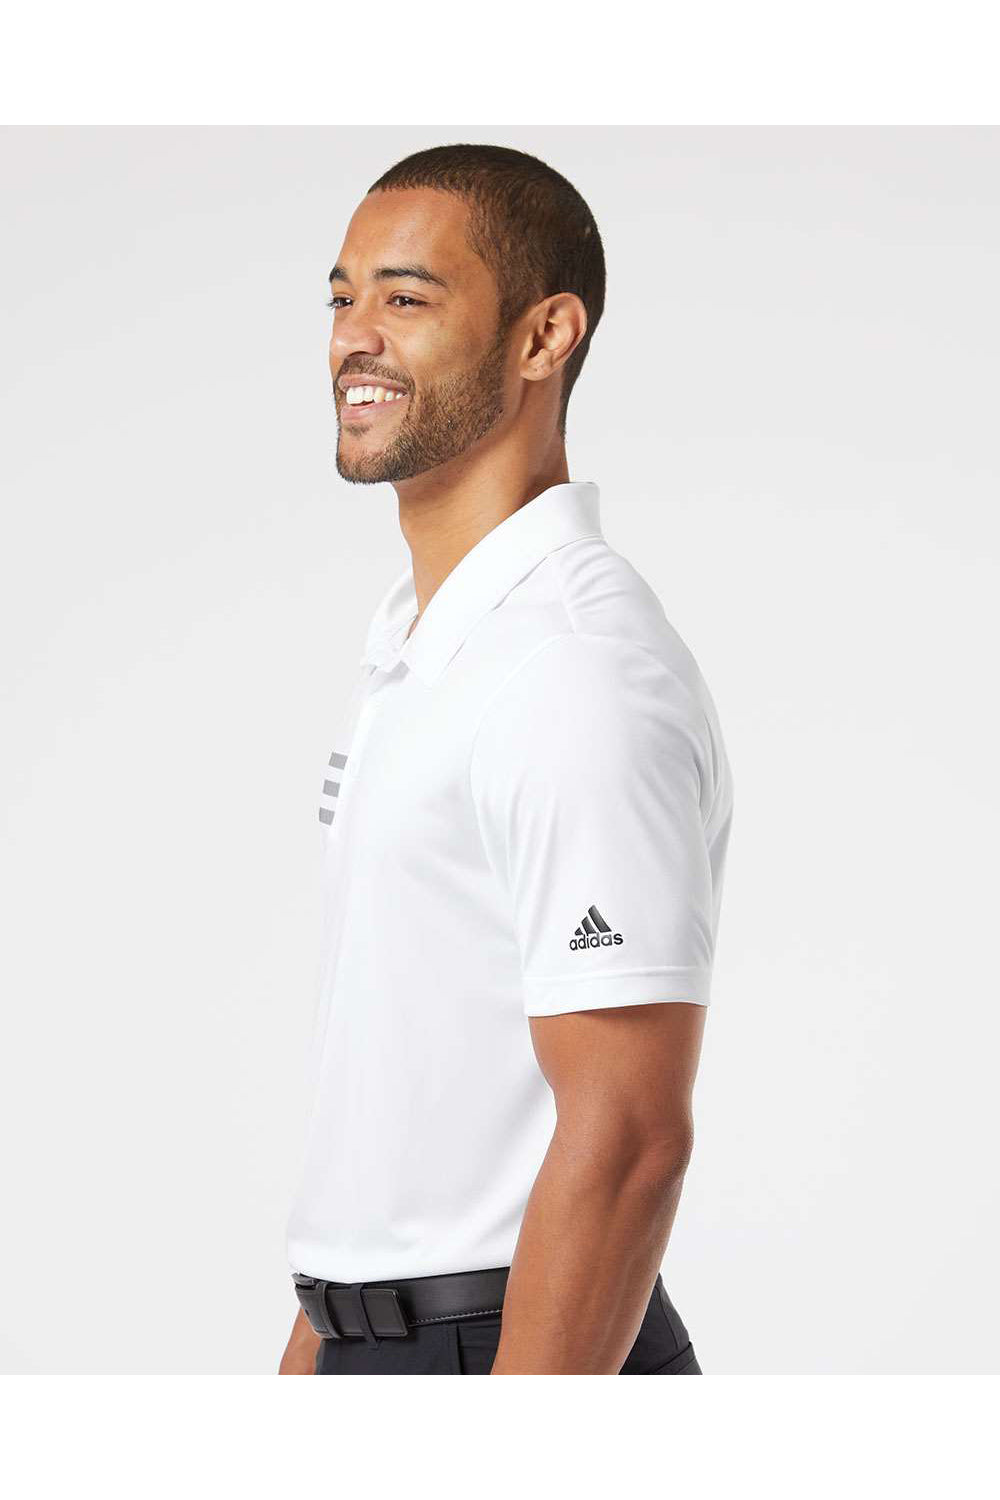 Adidas A324 Mens 3 Stripes Short Sleeve Polo Shirt White/Black Model Back